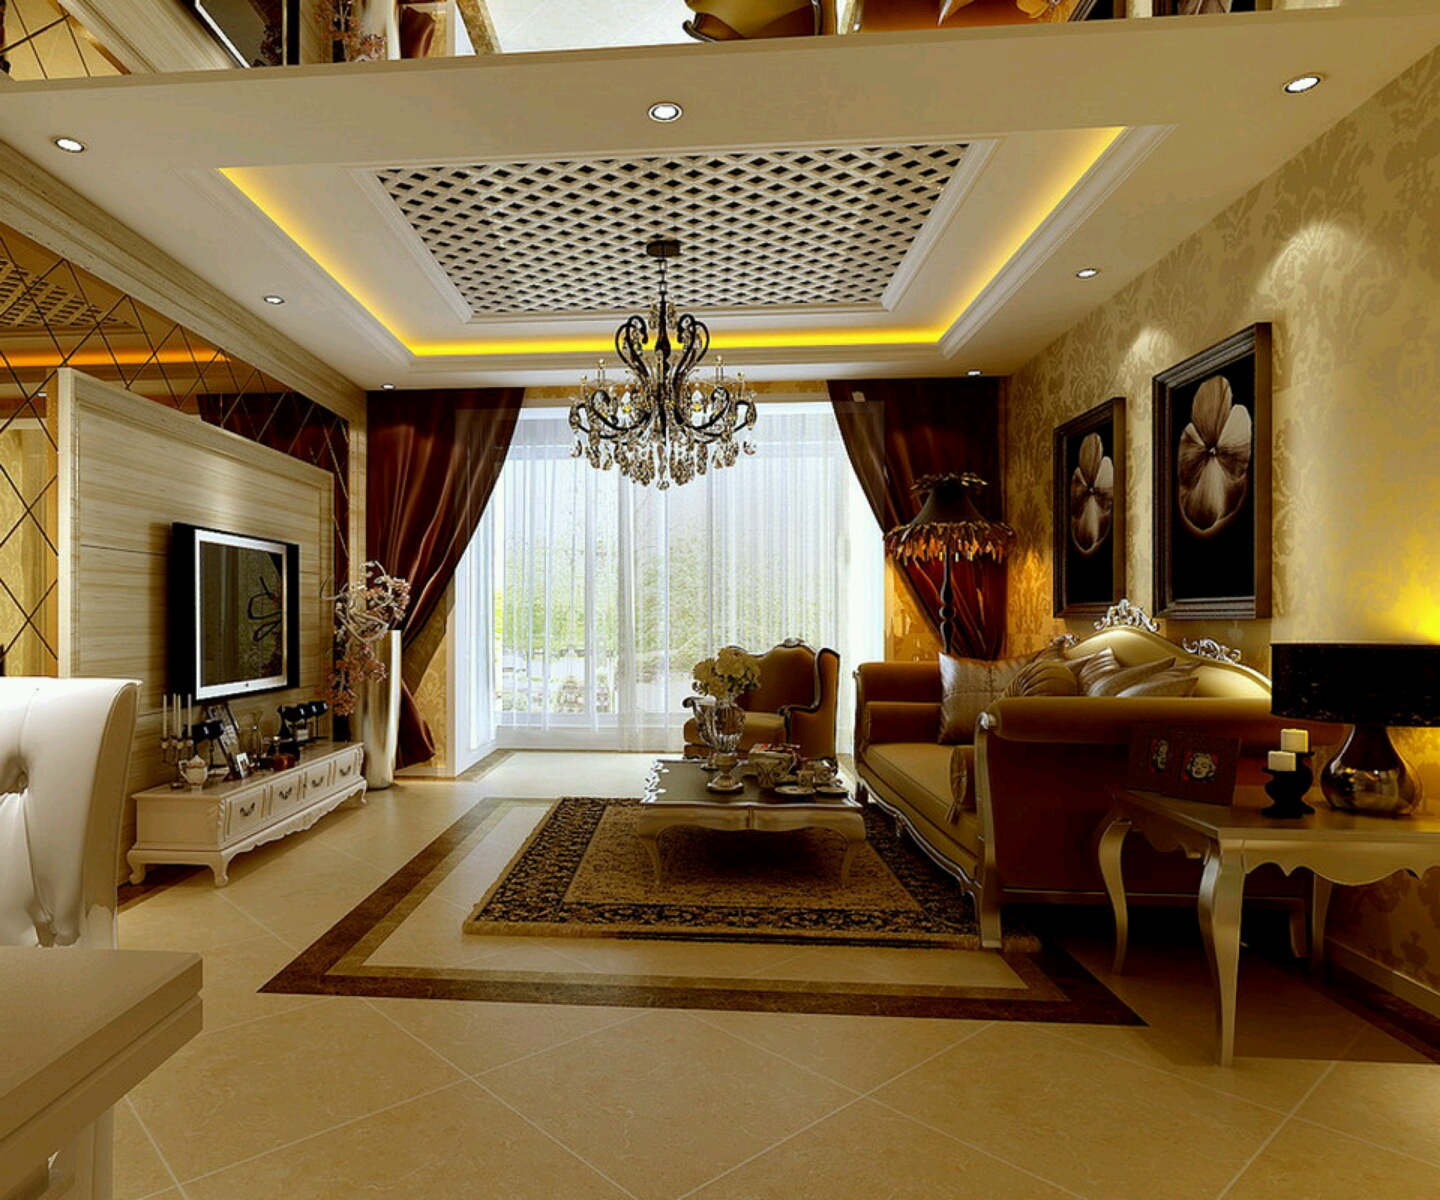  latest.: Luxury homes interior decoration living room designs ideas